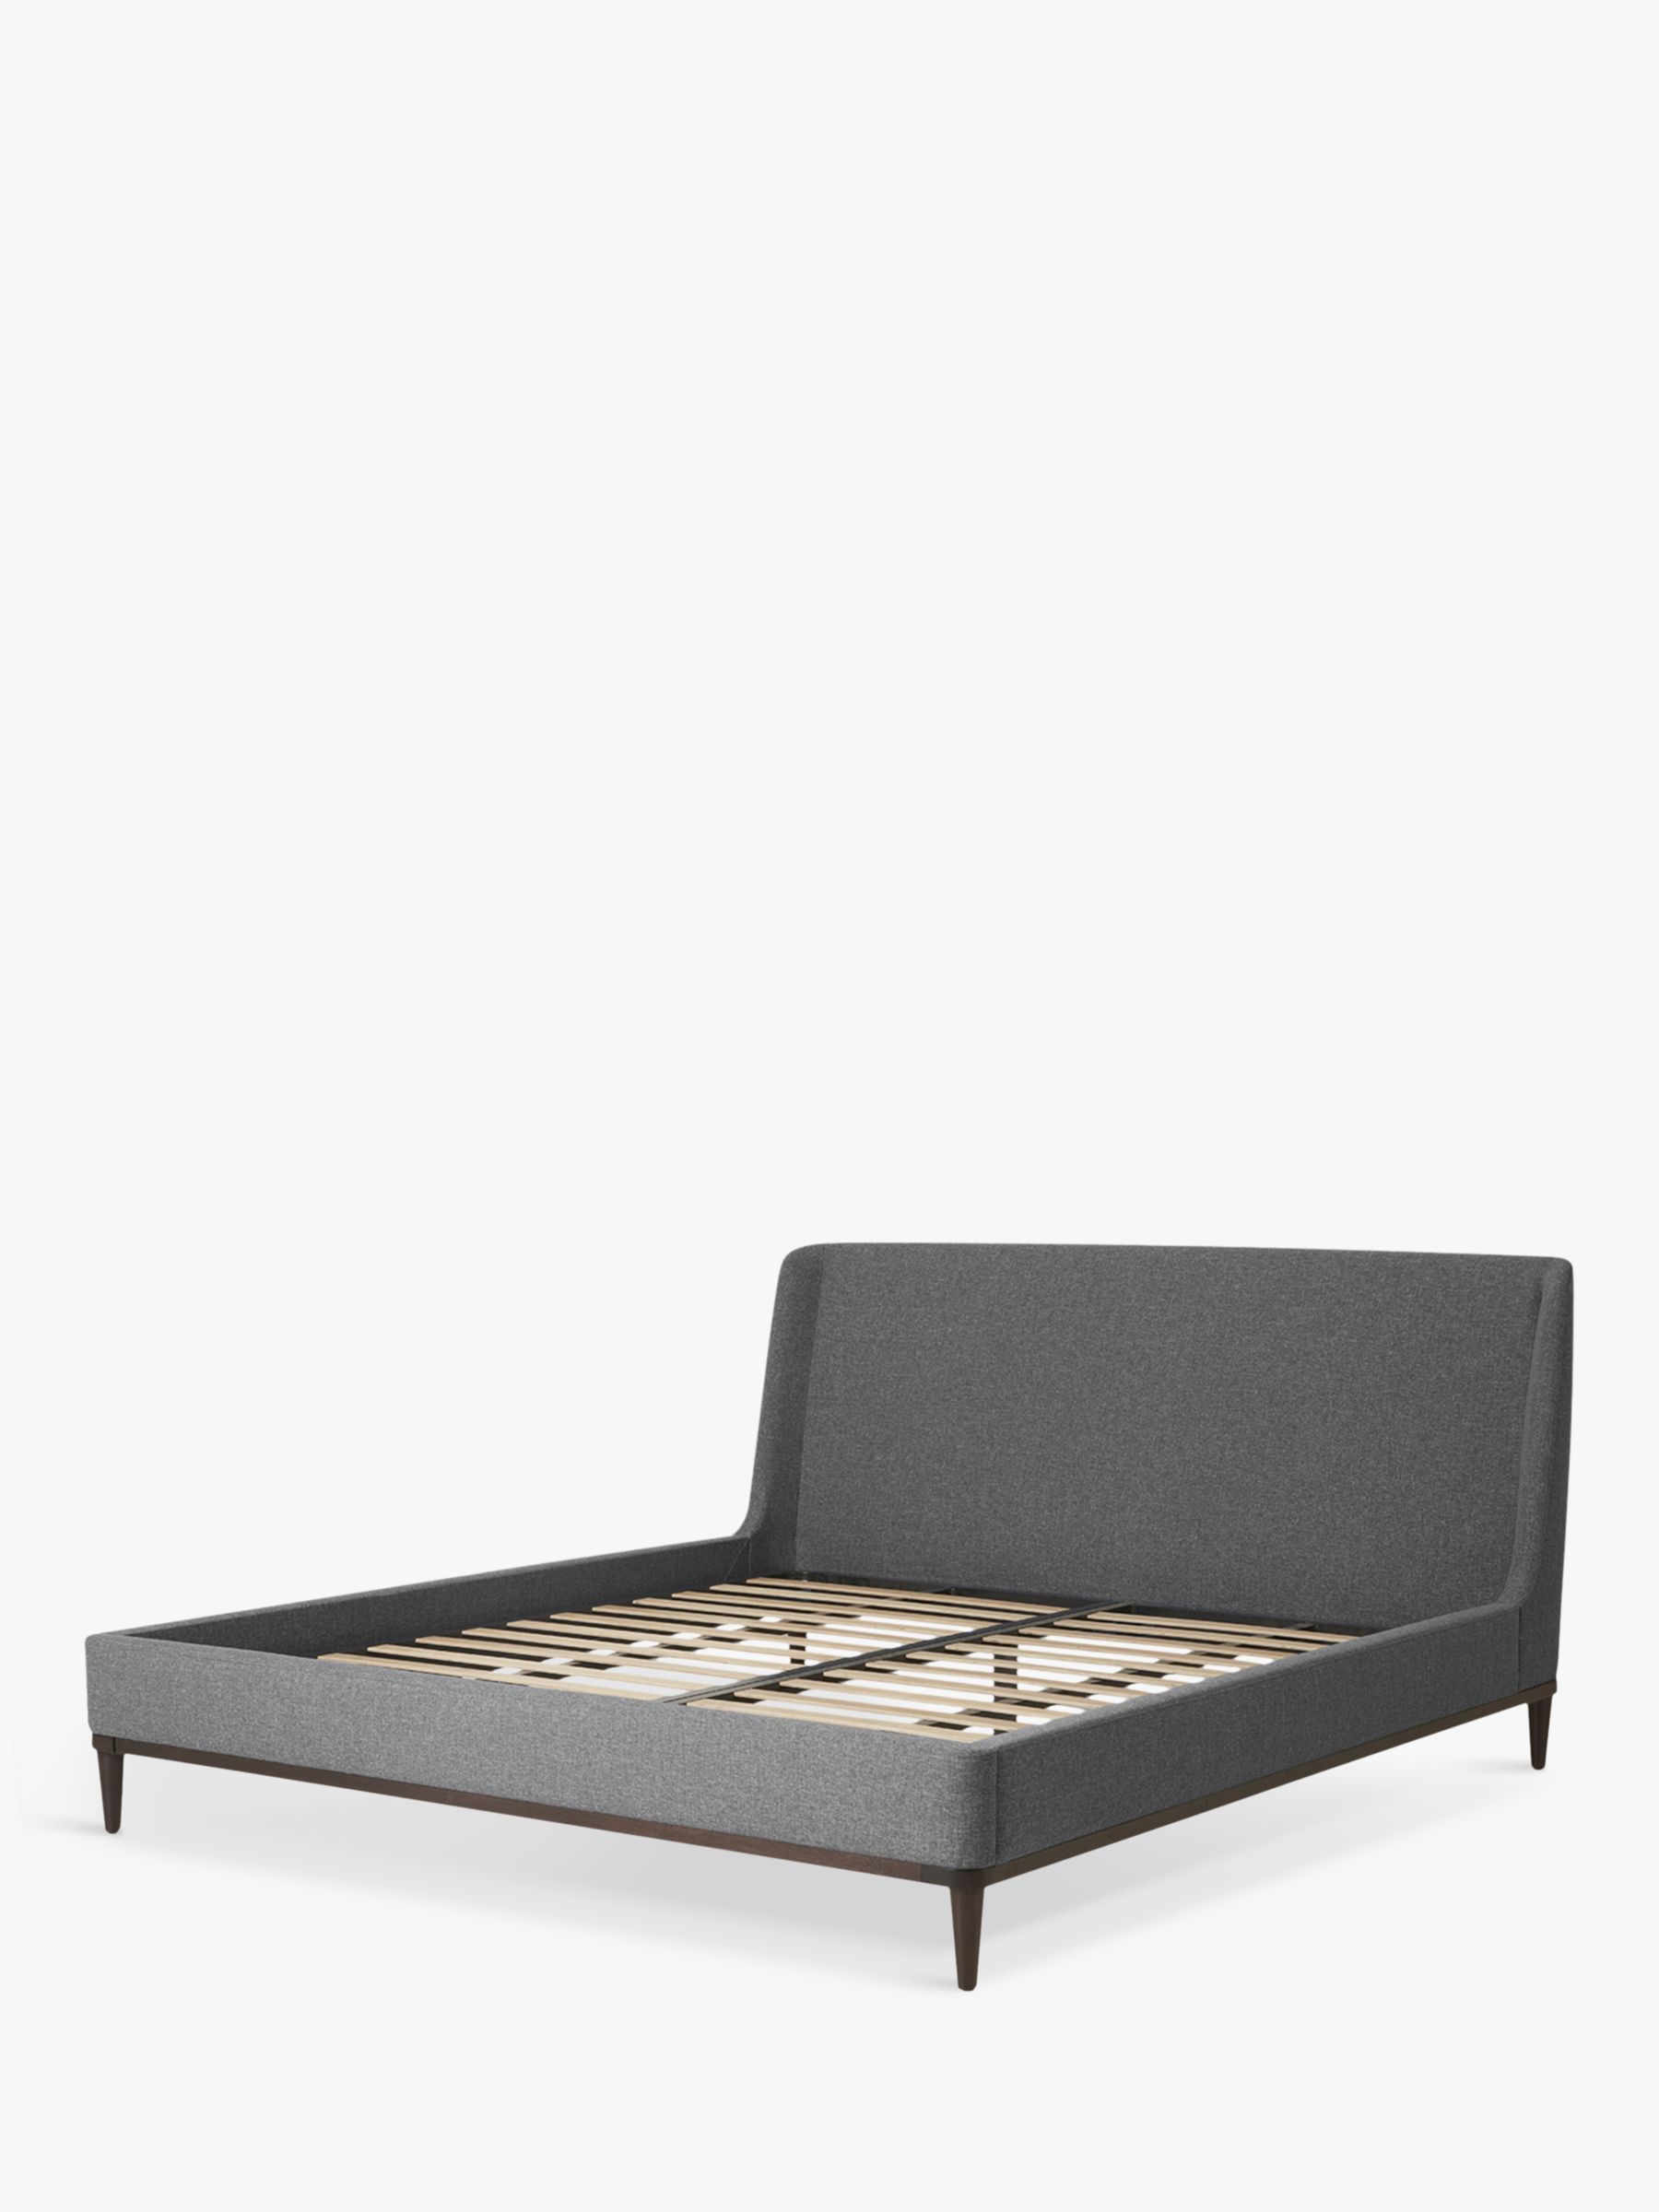 Photo of Swyft bed 02 upholstered bed frame super king size